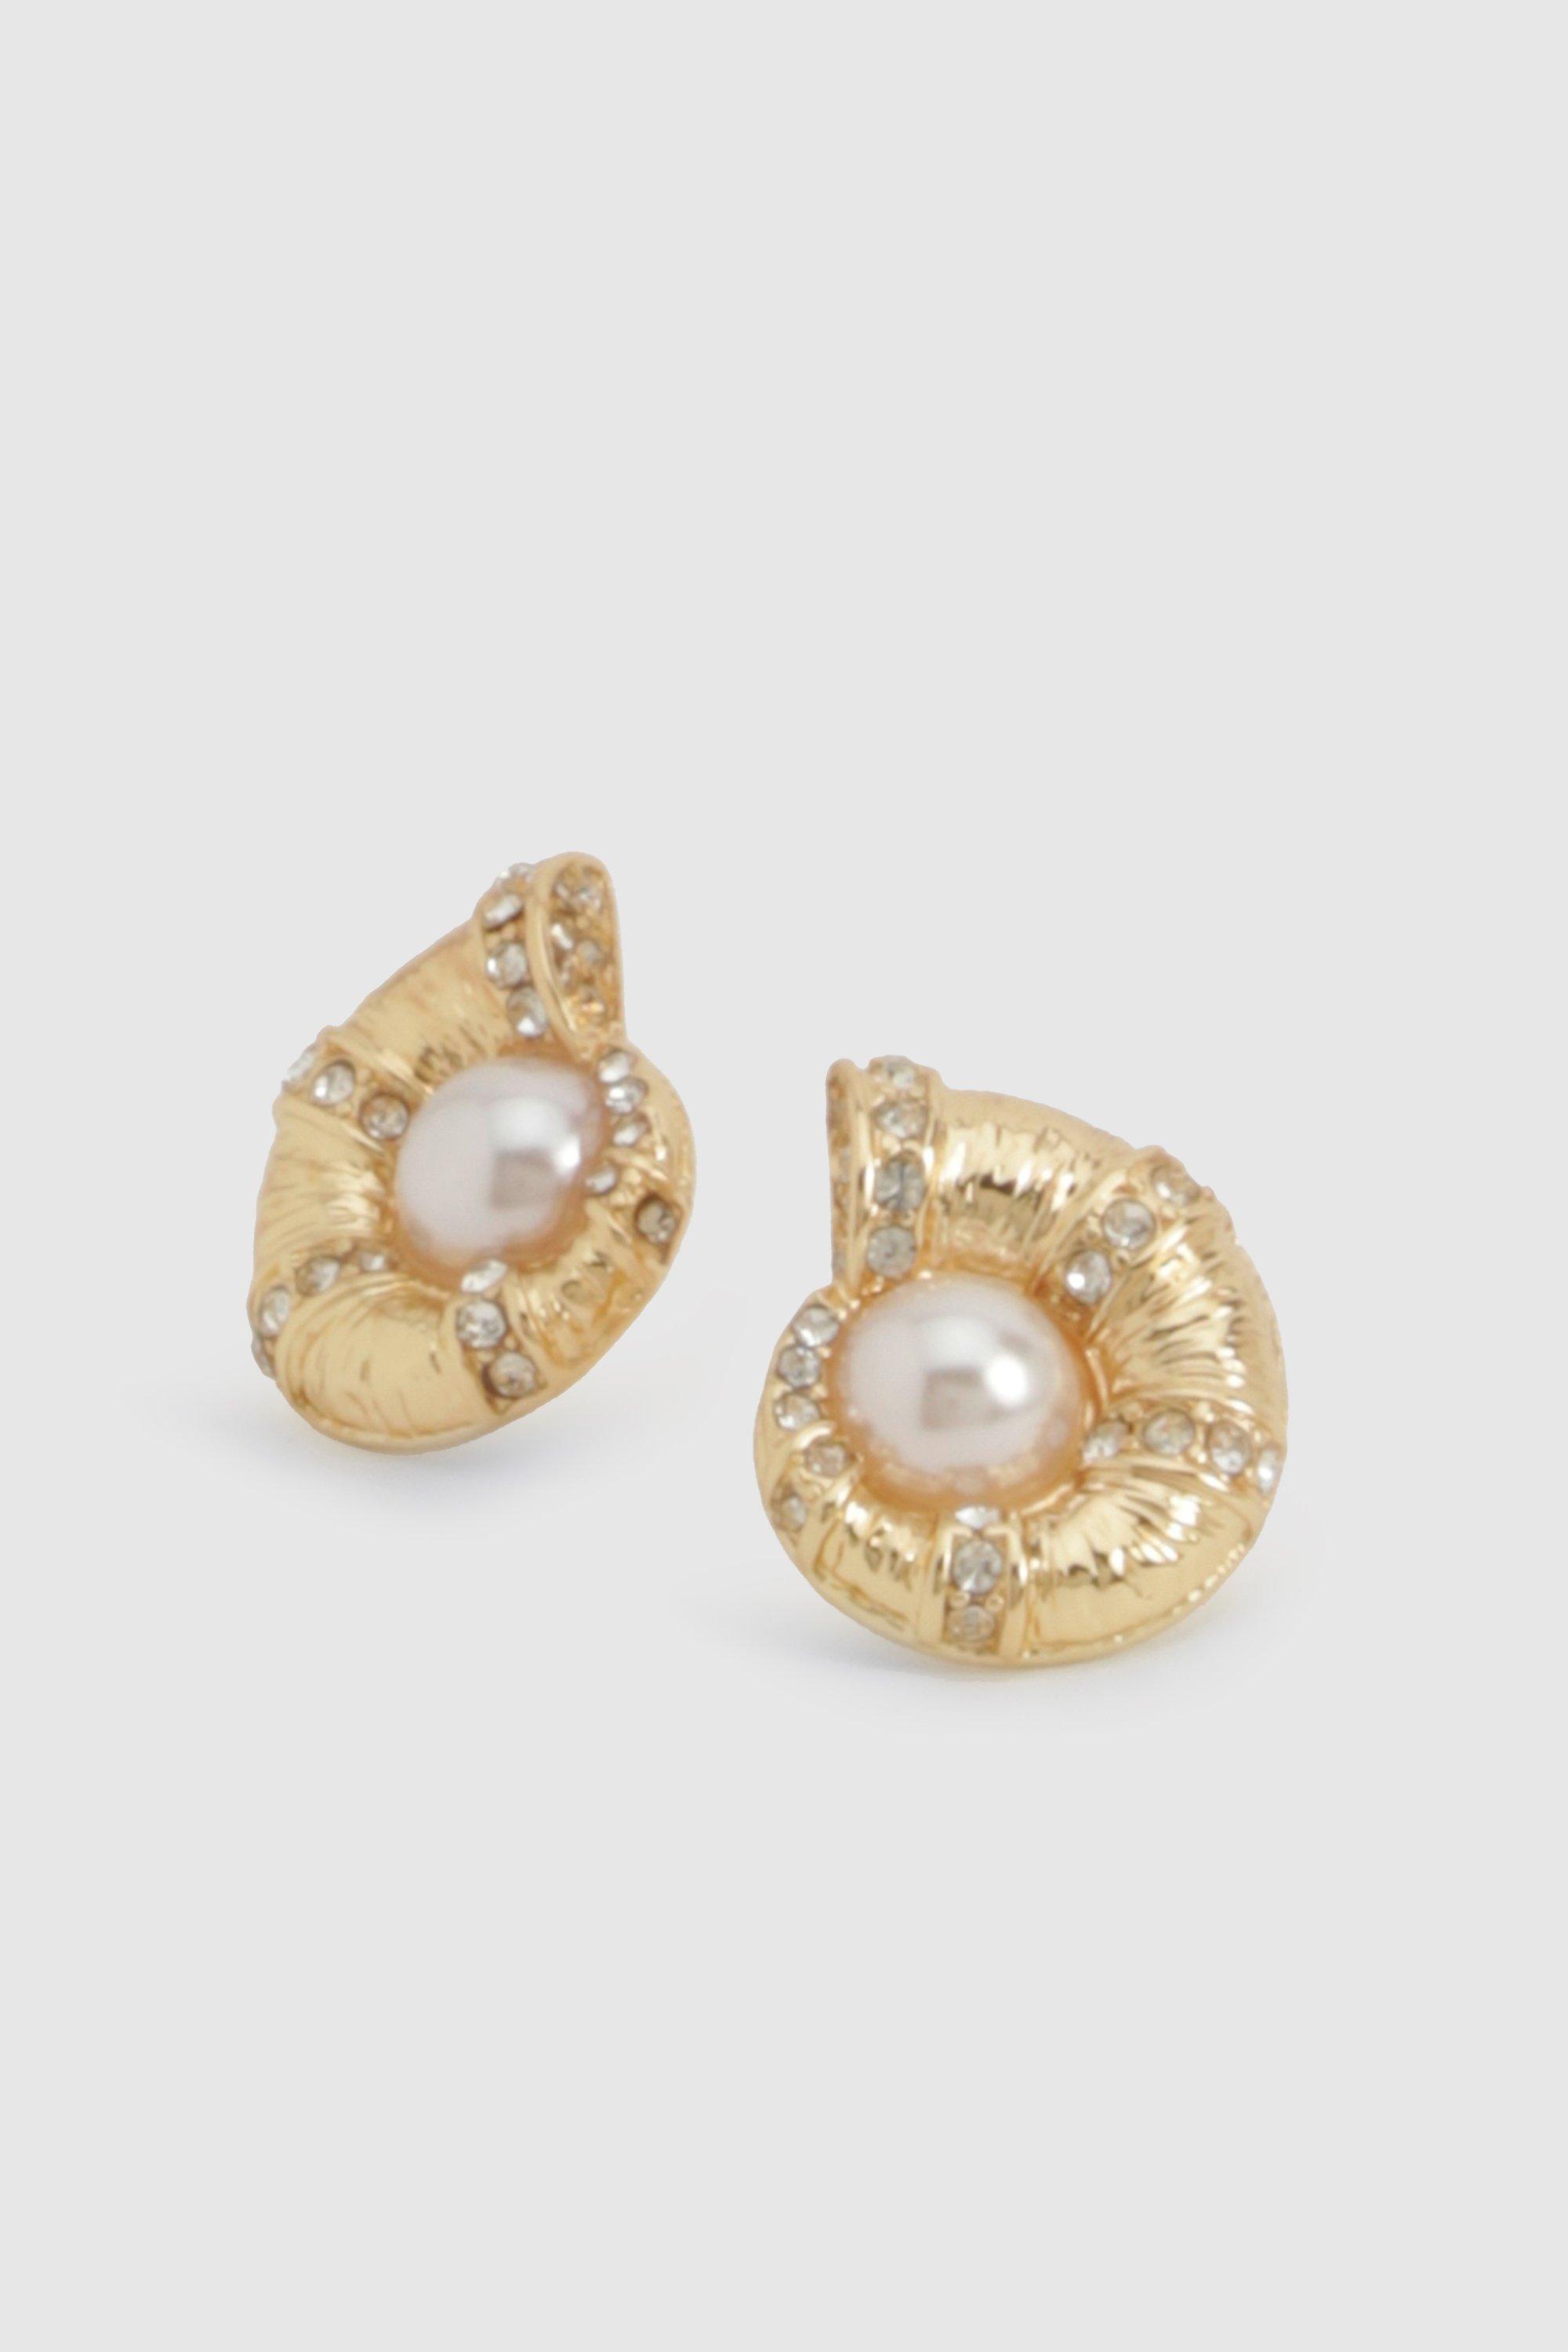 Image of Embellished Pearl Sea Shell Stud Earrings, Metallics